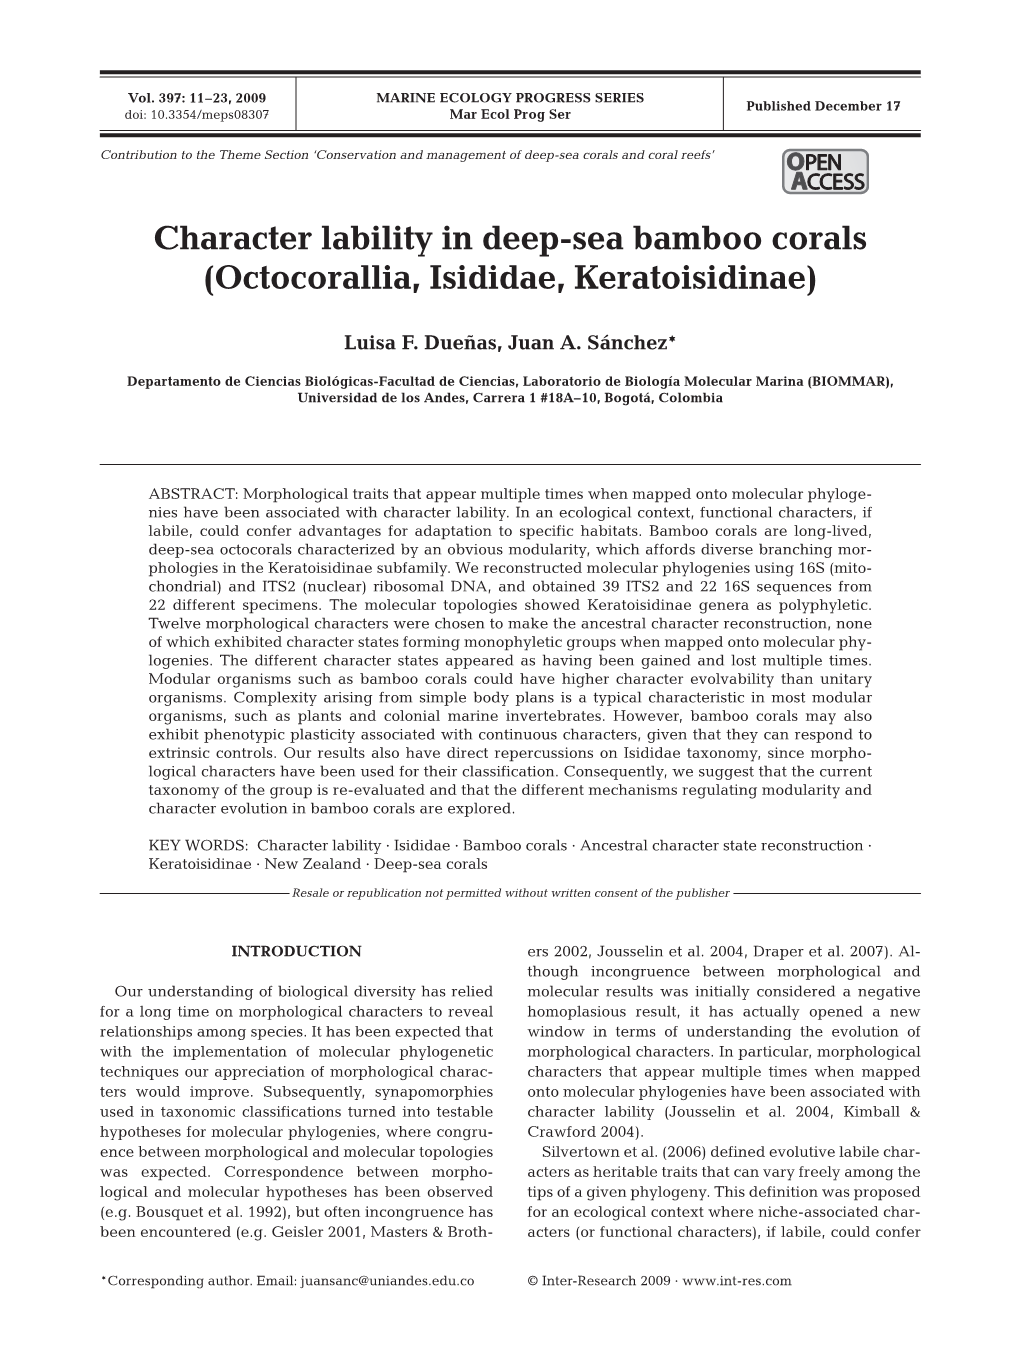 Character Lability in Deep-Sea Bamboo Corals (Octocorallia, Isididae, Keratoisidinae)